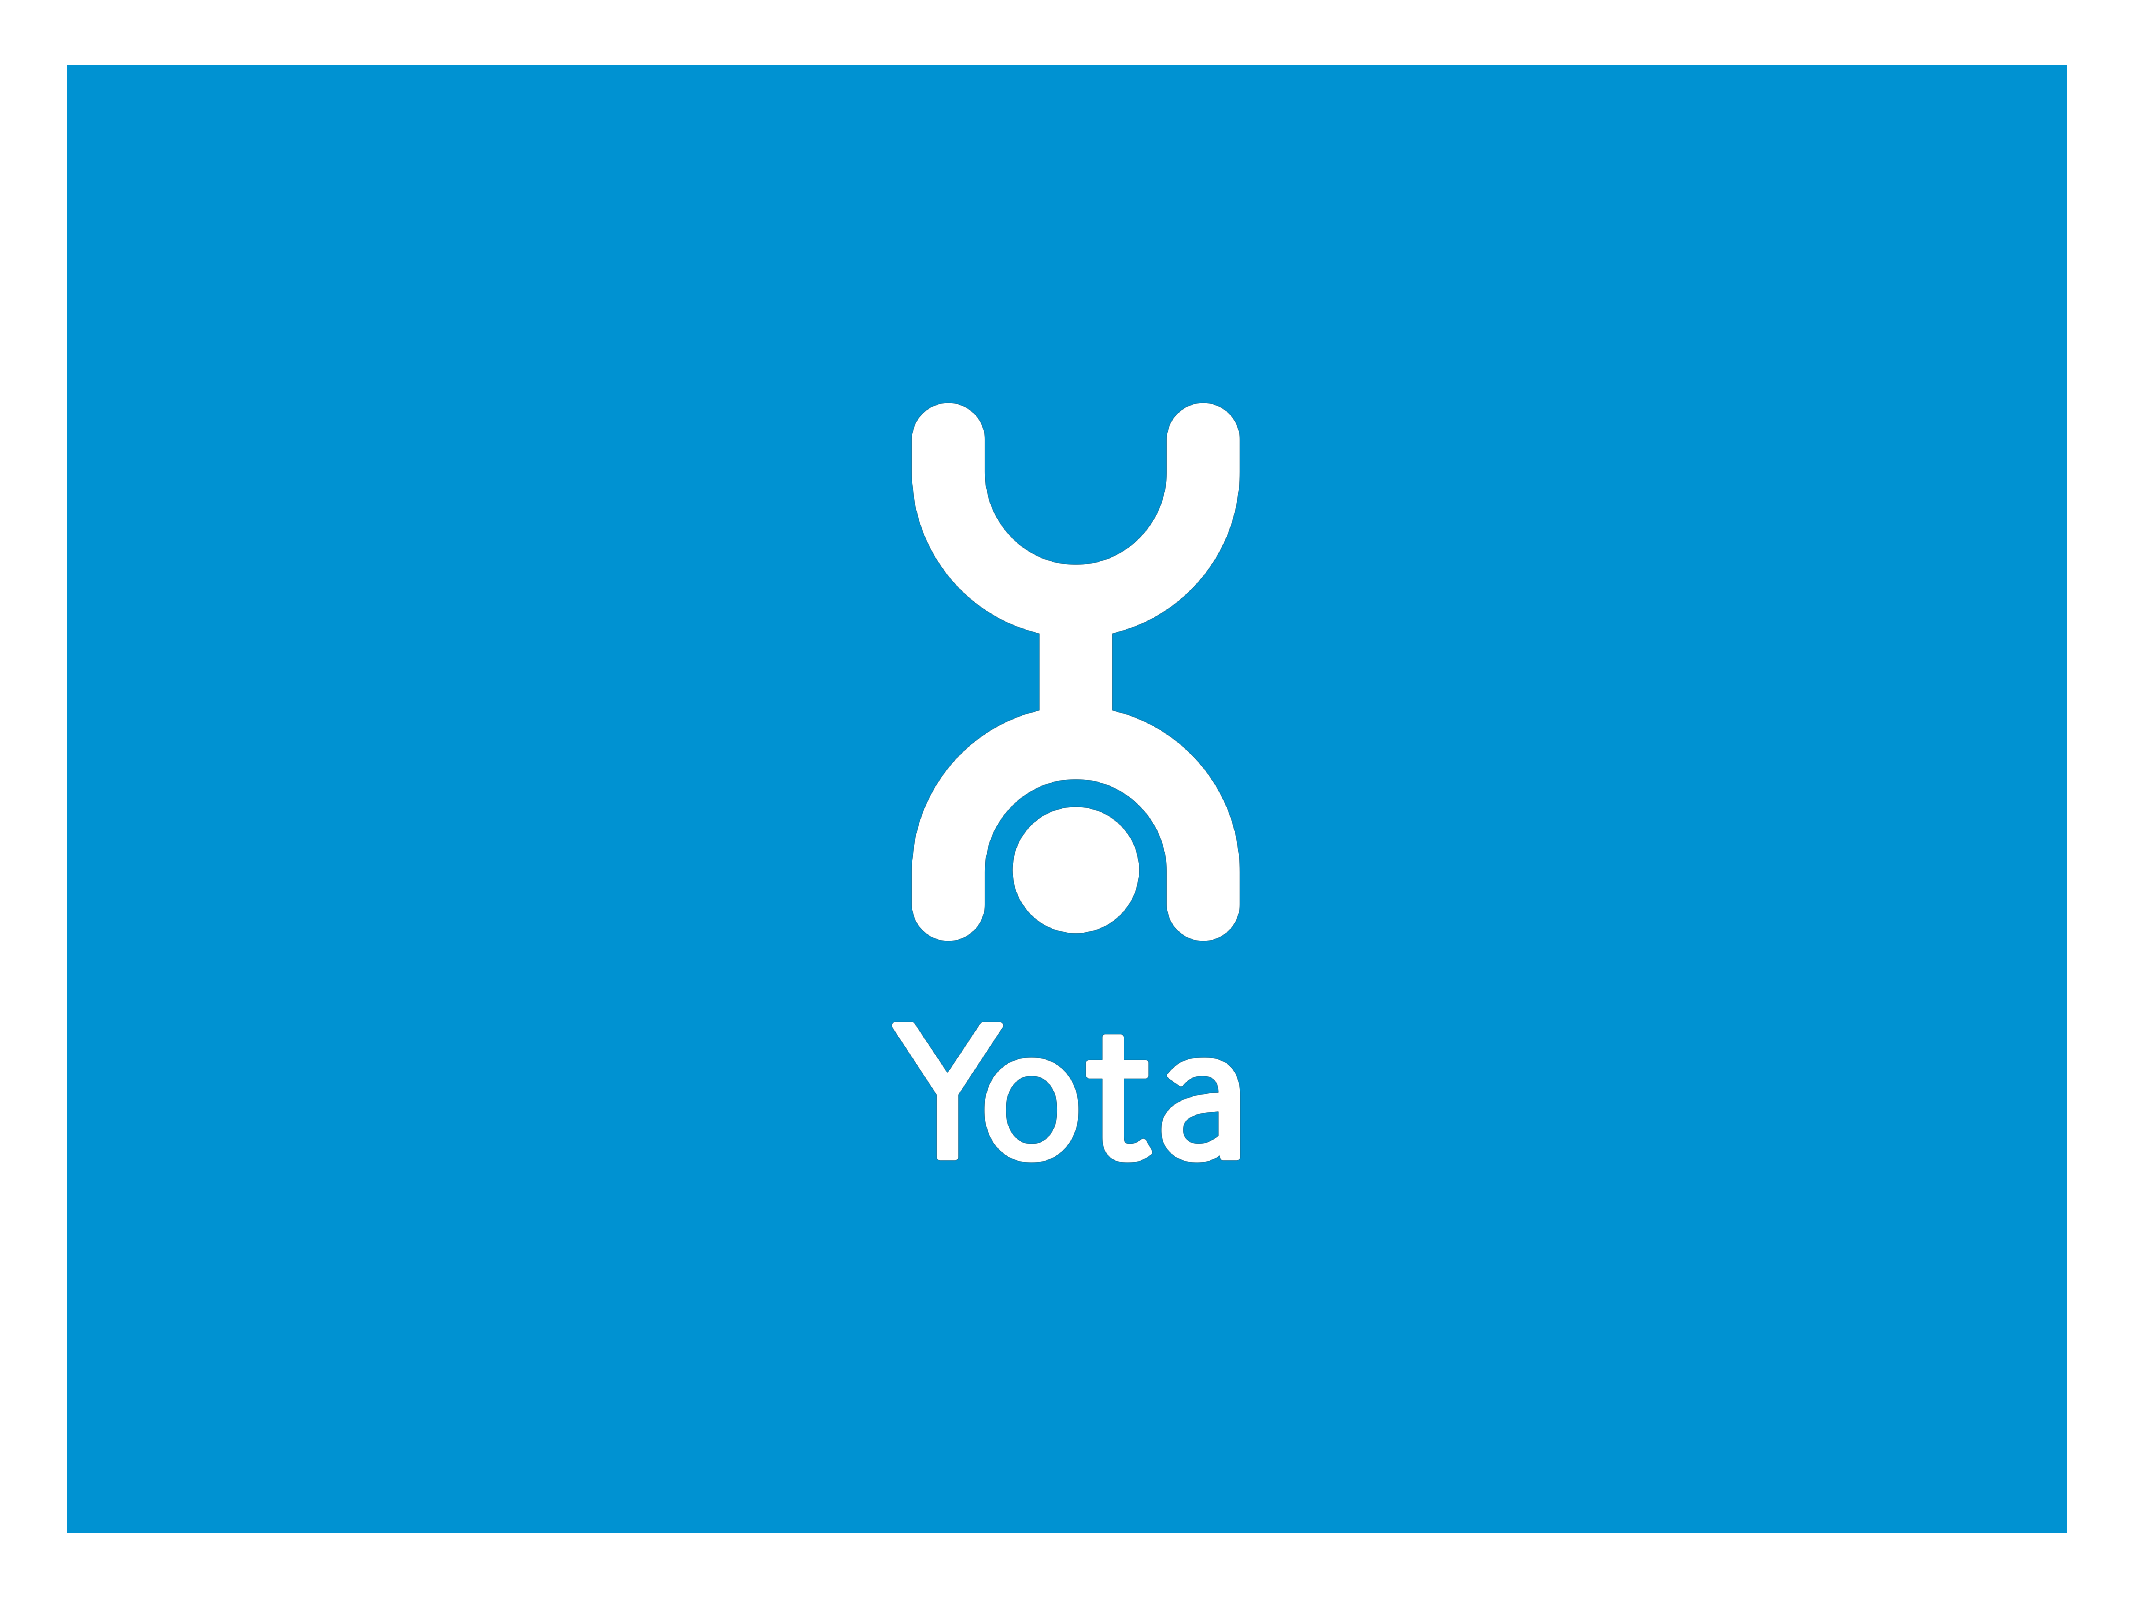 Yota busy life. Yota. Ета логотип. Реклама Yota. Йота персонаж.